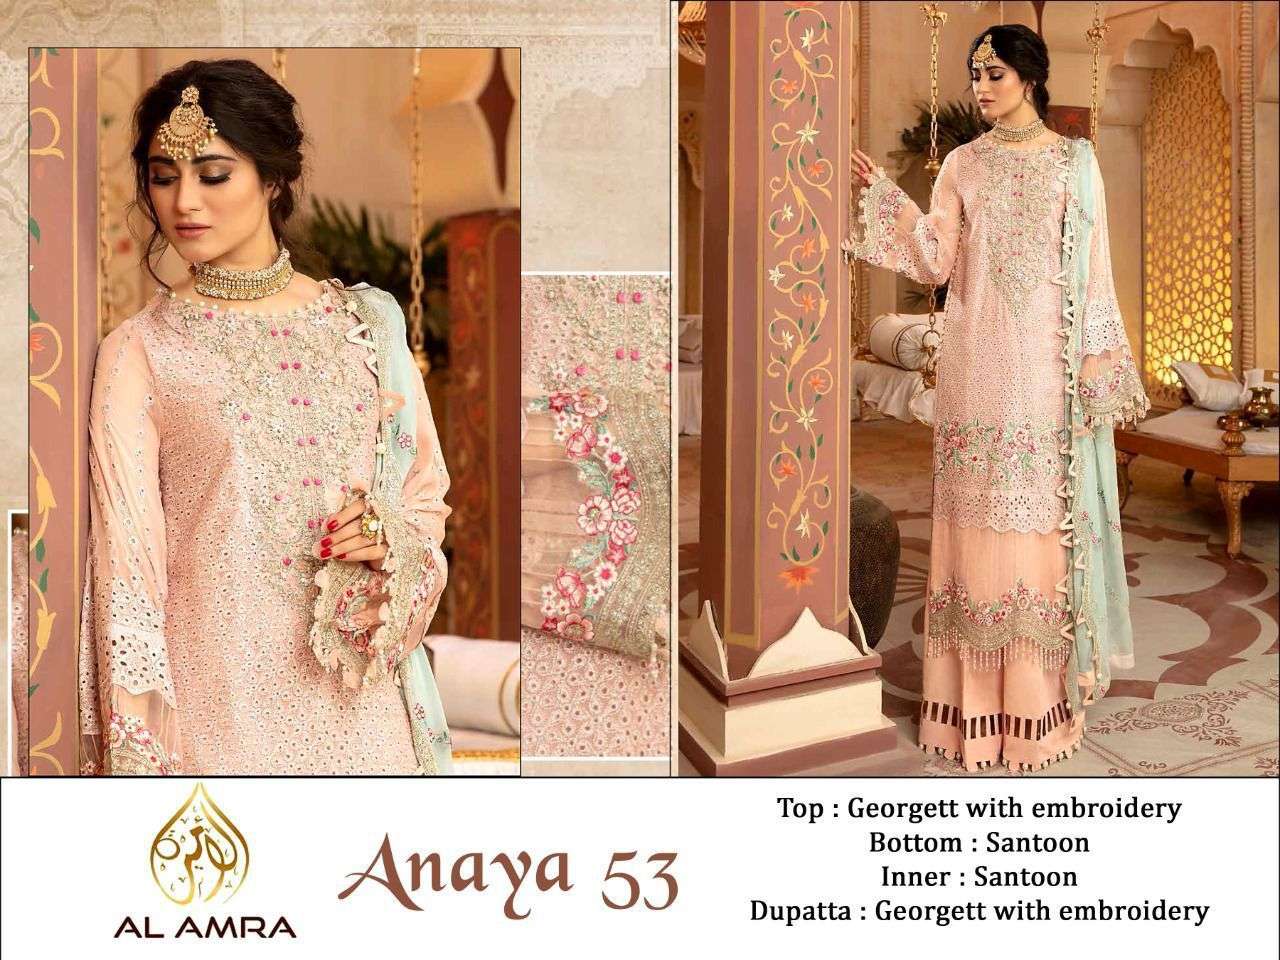 ANAYA ZF 53 BY AL AMRA DESIGNER GEORGETTE EMBROIDERY PAKISTANI DRESS